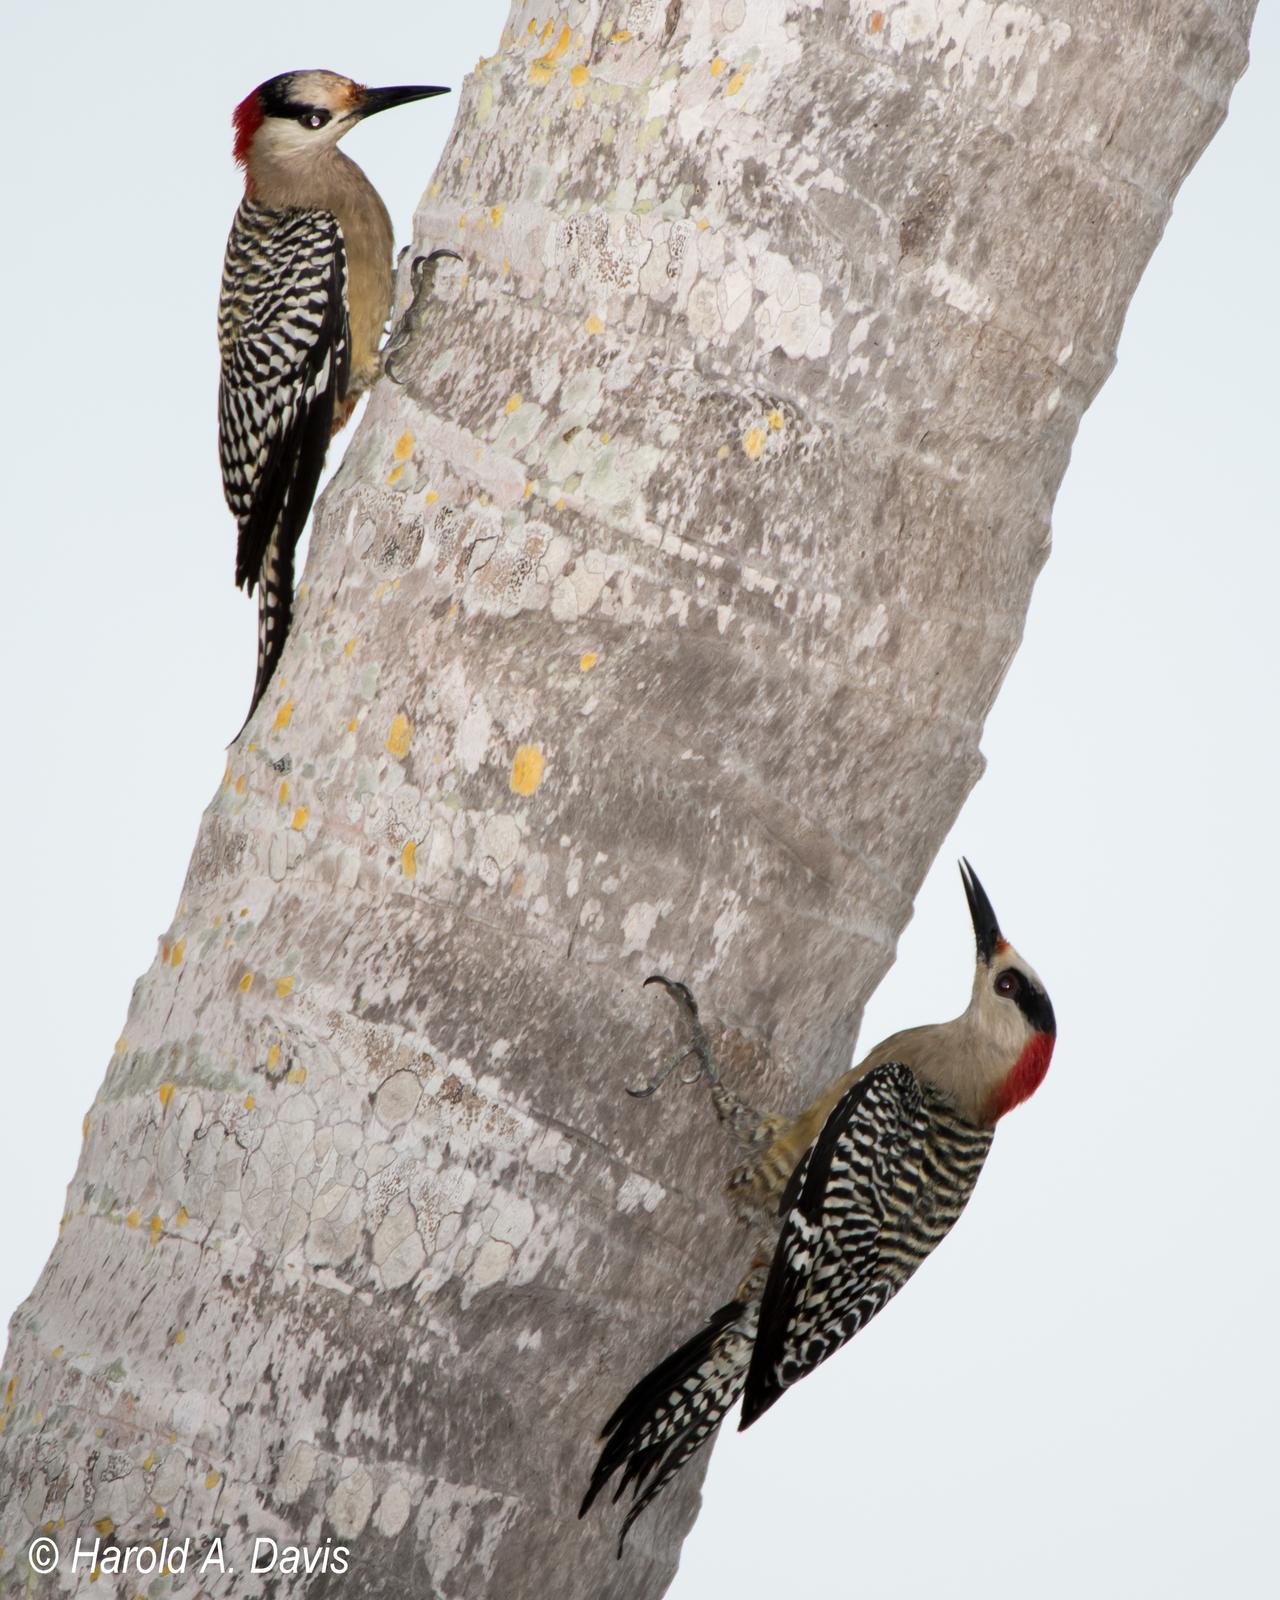 West Indian Woodpecker Photo by Harold Davis